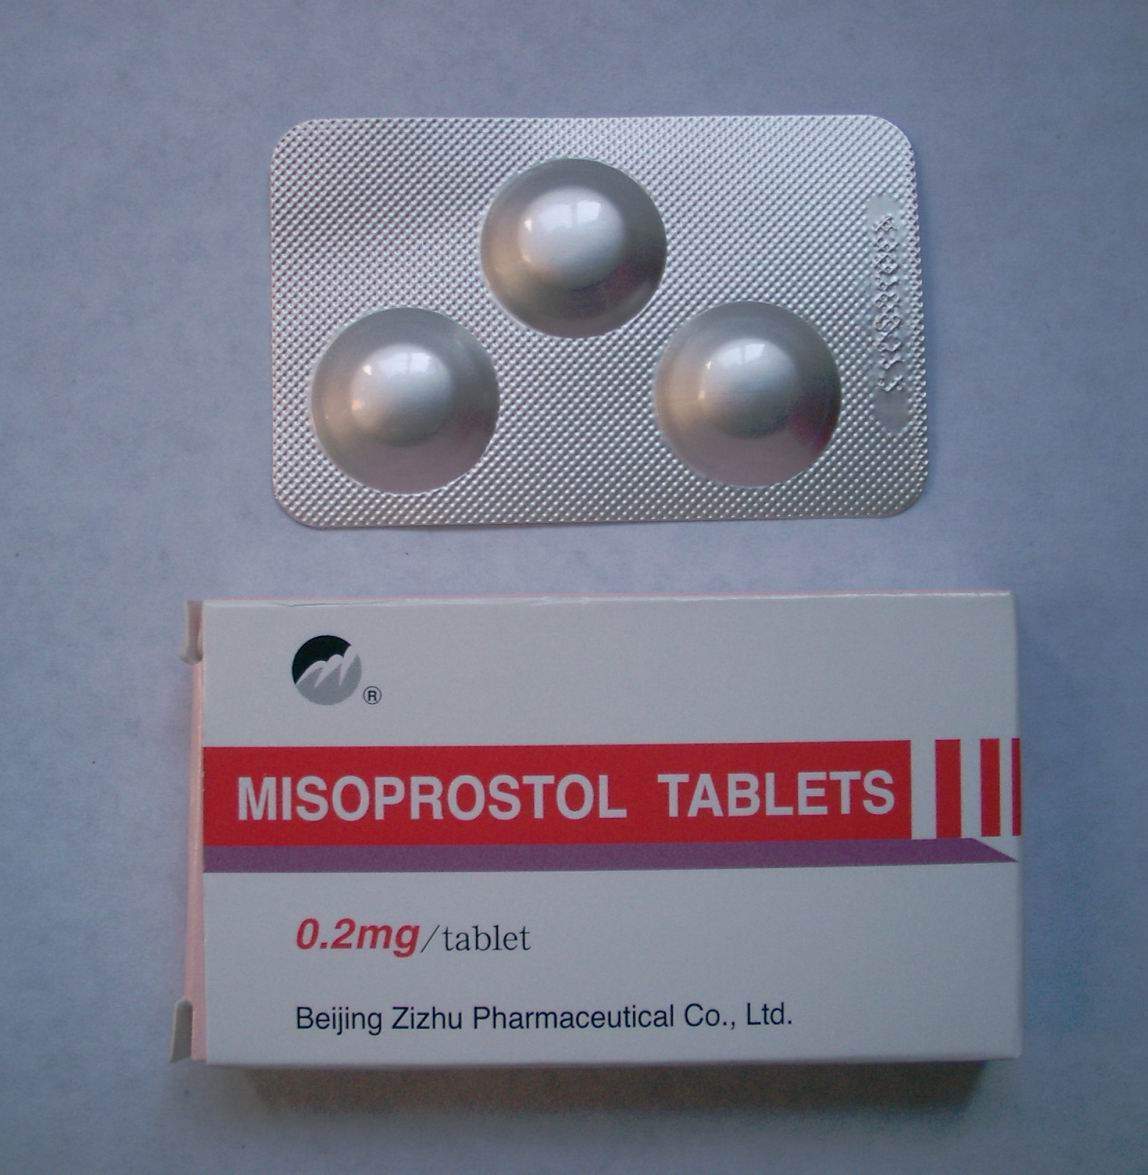 Где можно найти таблетки. Mifepristone-200mg. Таблетки от выкидыша. Мизопростол. Недорогие таблетки для выкидыша.